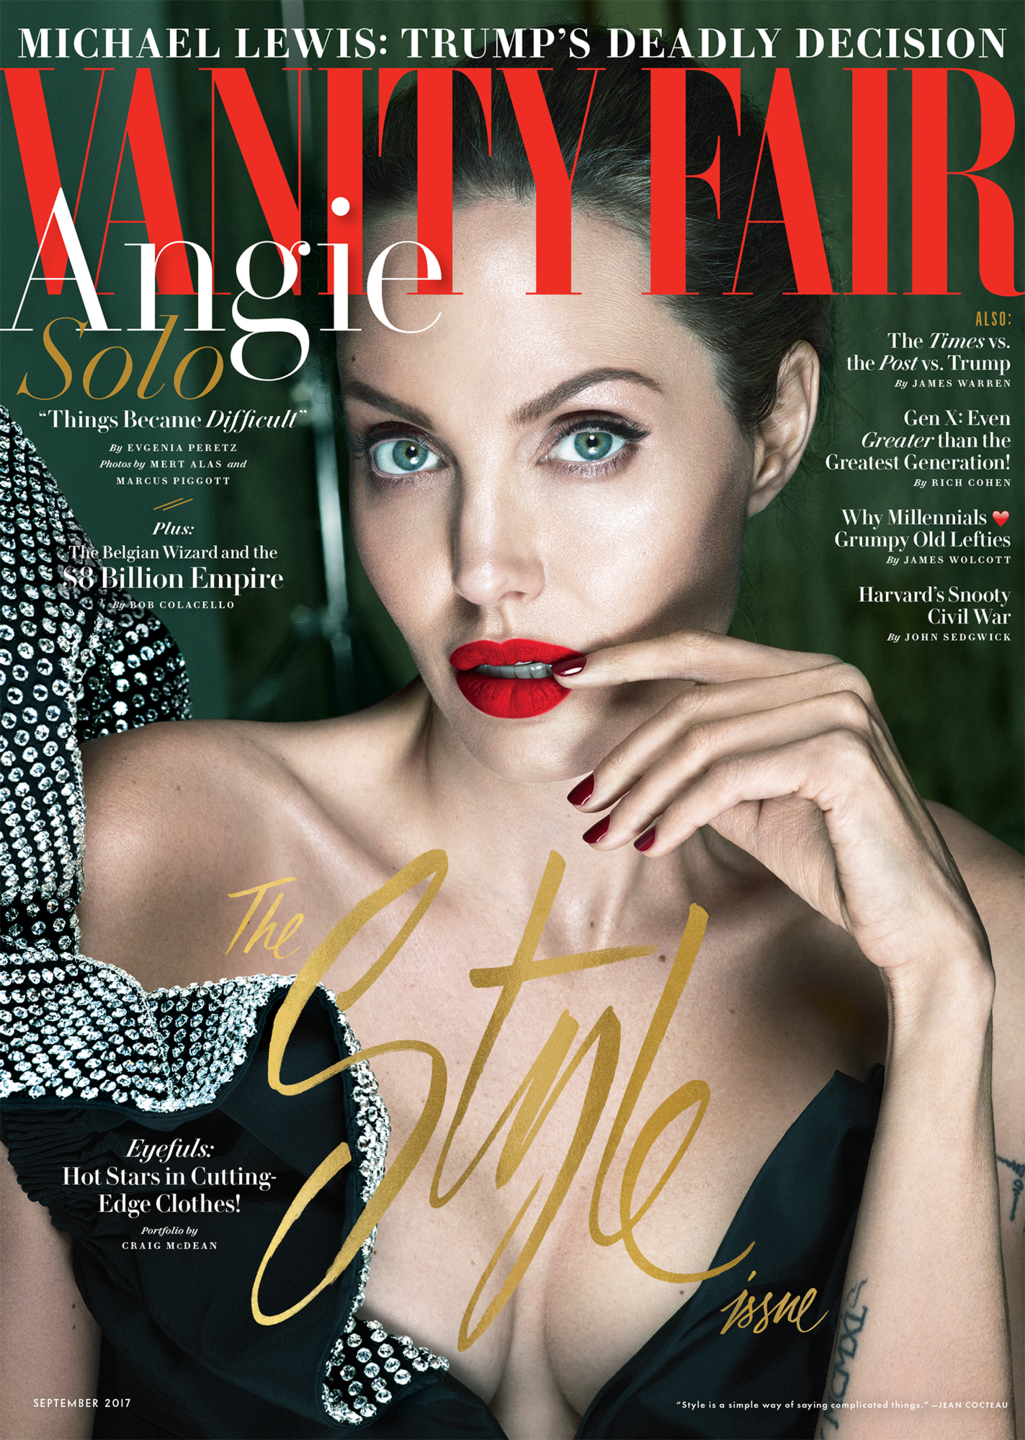 To εξώφυλλο του Vanity Fair με την Angelina Jolie